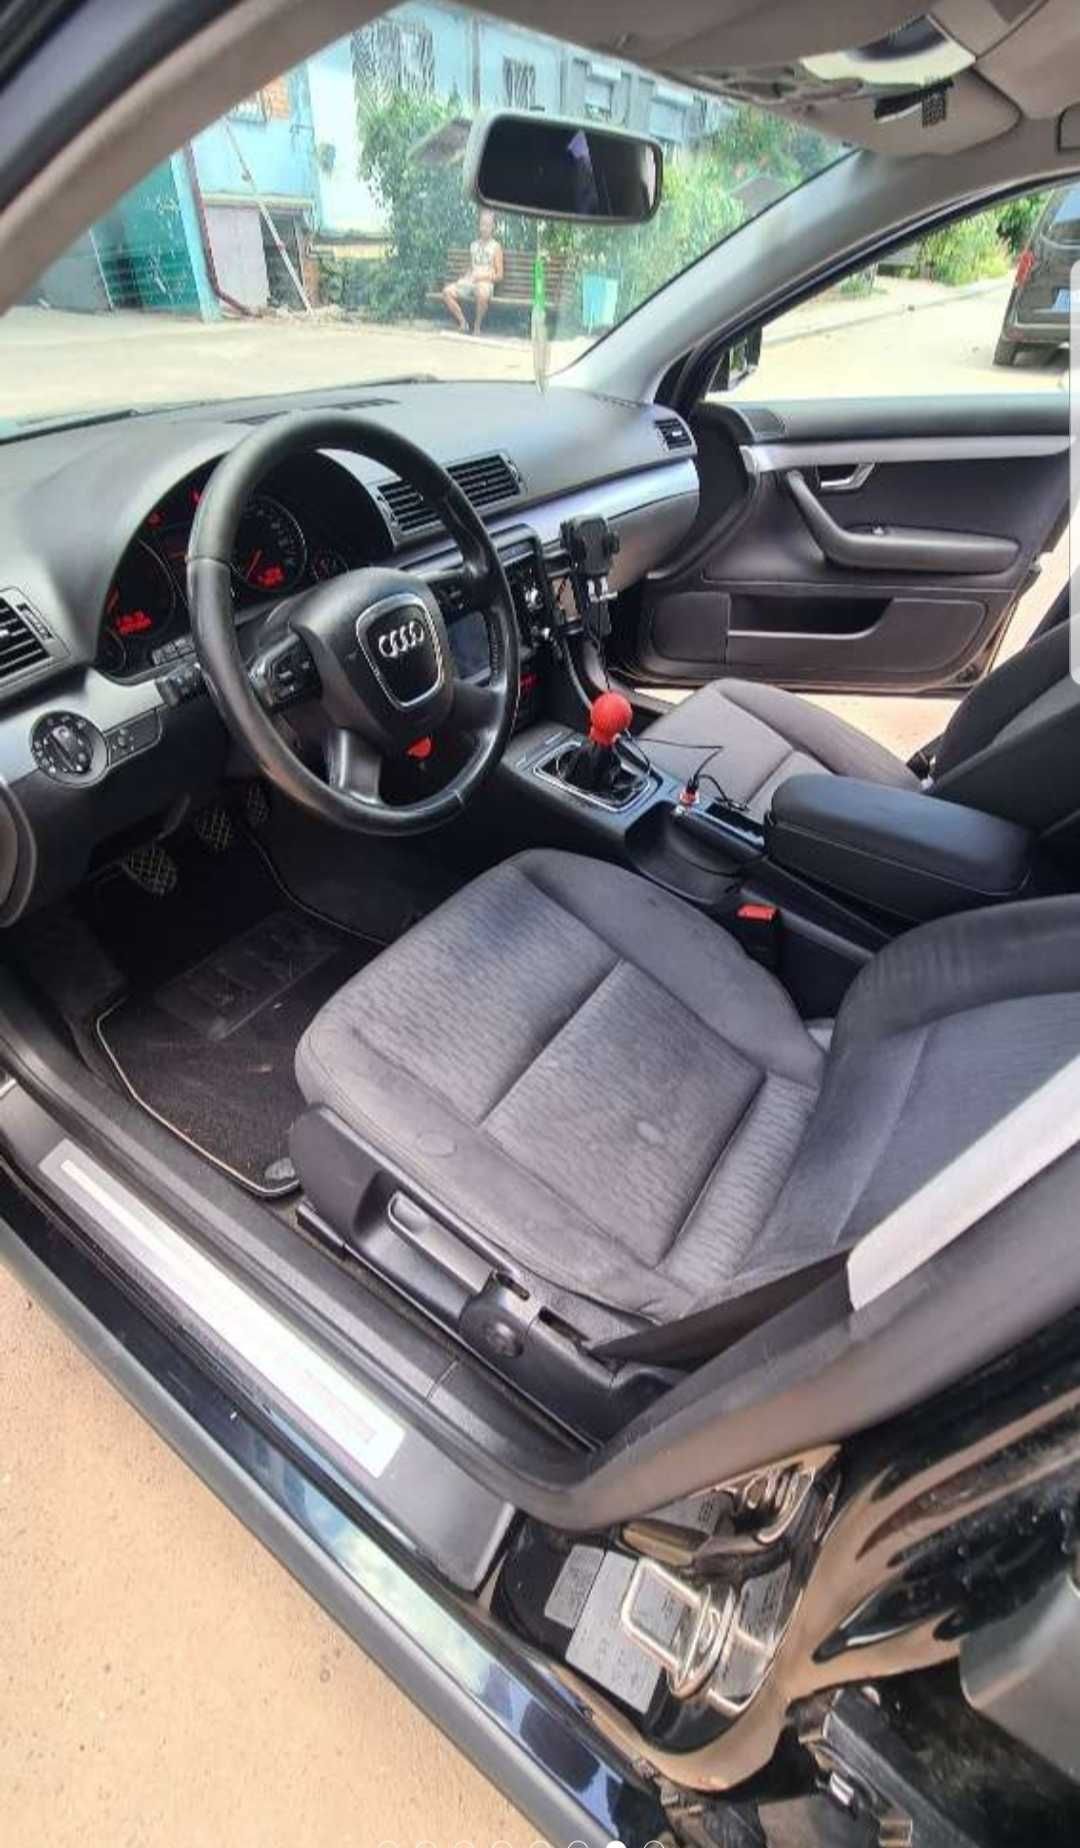 Audi A4 ,2007 , 2.0 TDI, detalii +436602335487